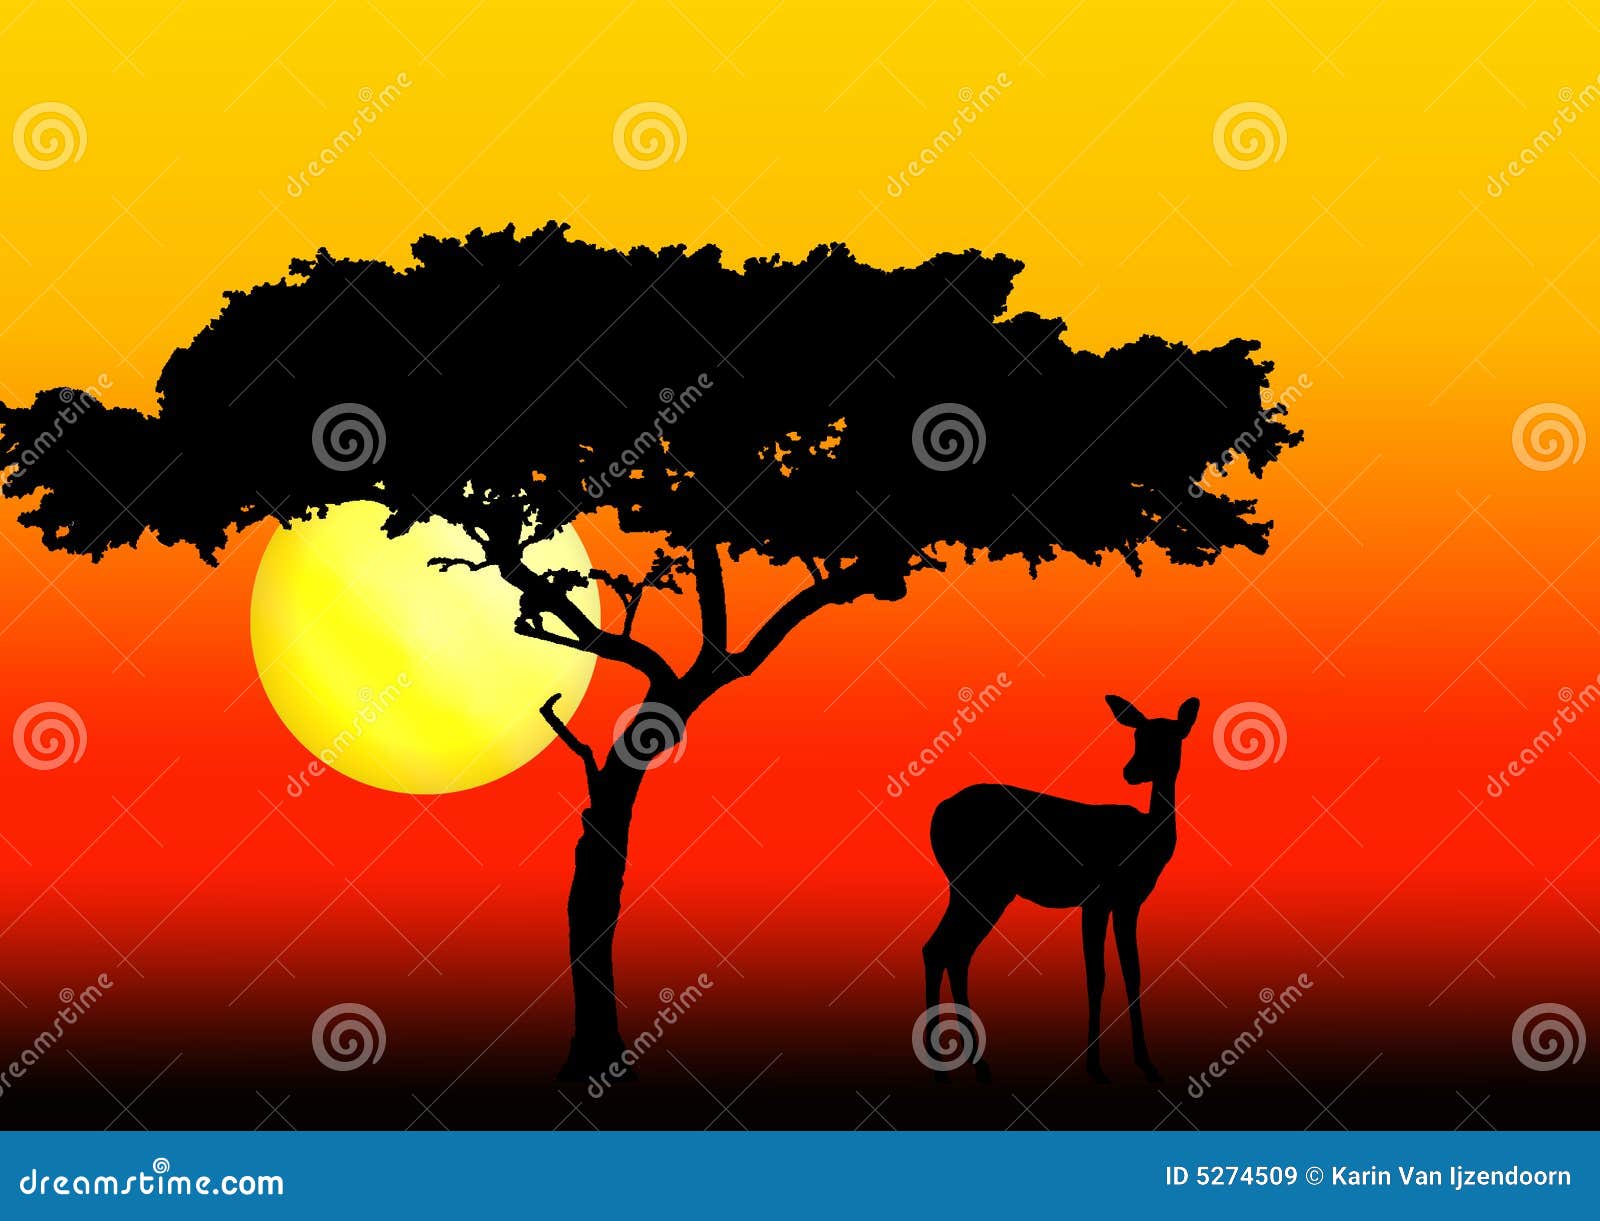 acacia and impala in sunset